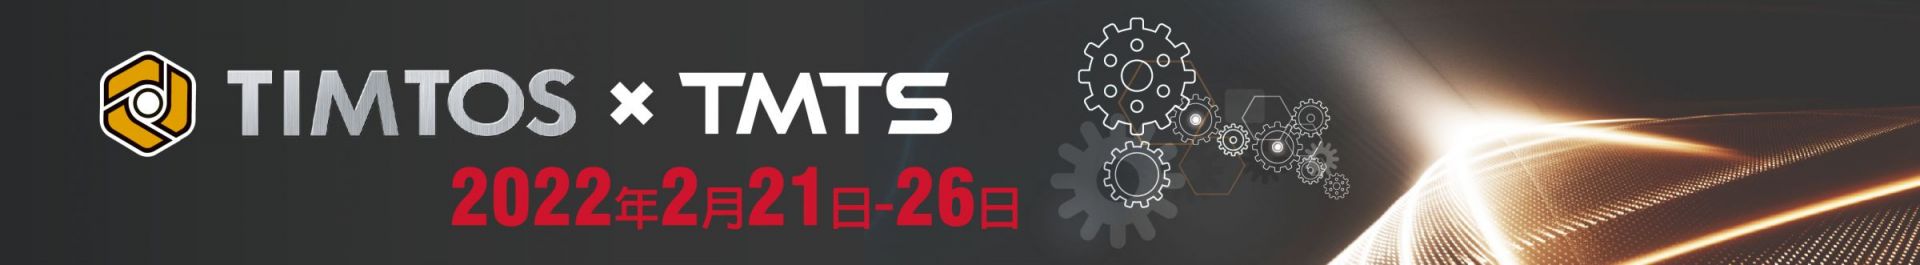 TIMTOS x TMTS 2022 Taipei International Machine Tool Exhibition